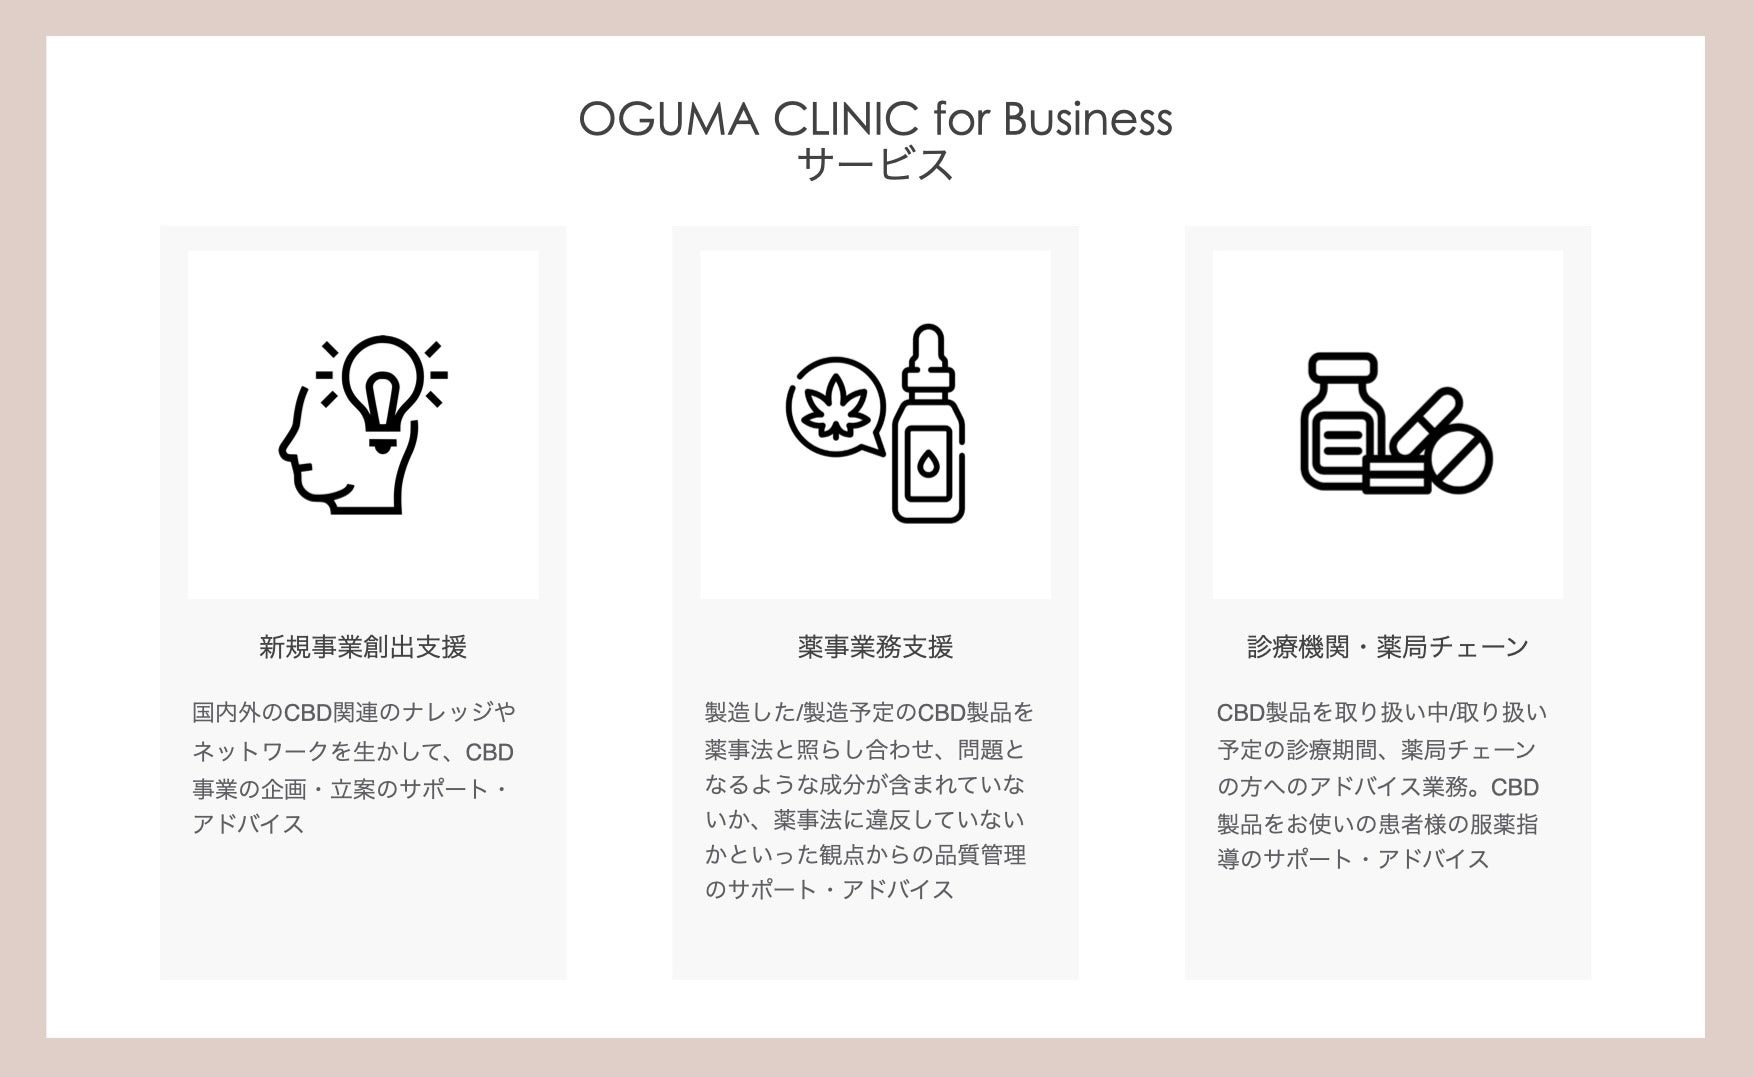 CBD薬剤師 尾熊やよい【OGUMA CLINIC（オグマクリニック）】は、企業様のCBD事業をサポートする『OGUMA CLINIC for Business』を導入いたします。